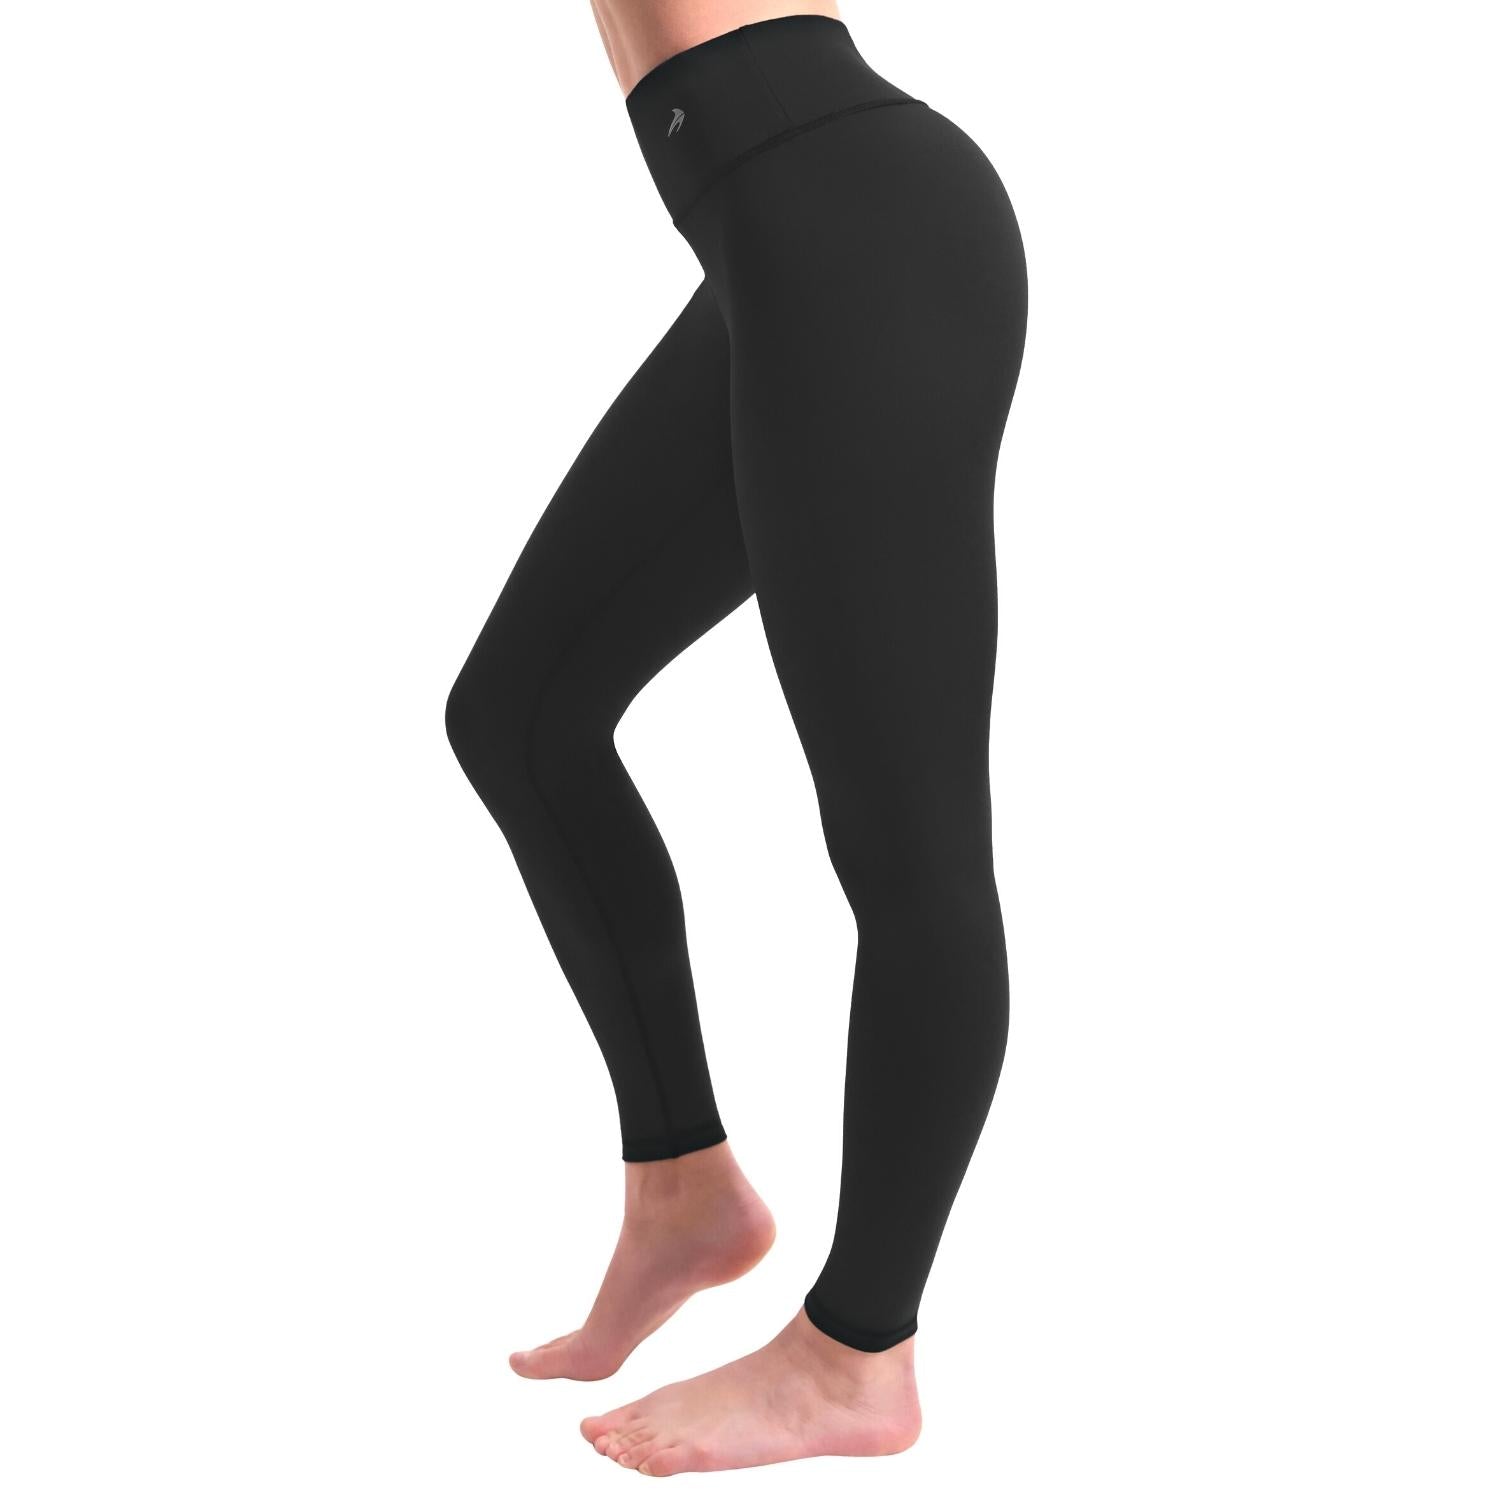 Women's Compression Leggings - Black W/ Back Zipper Pocket